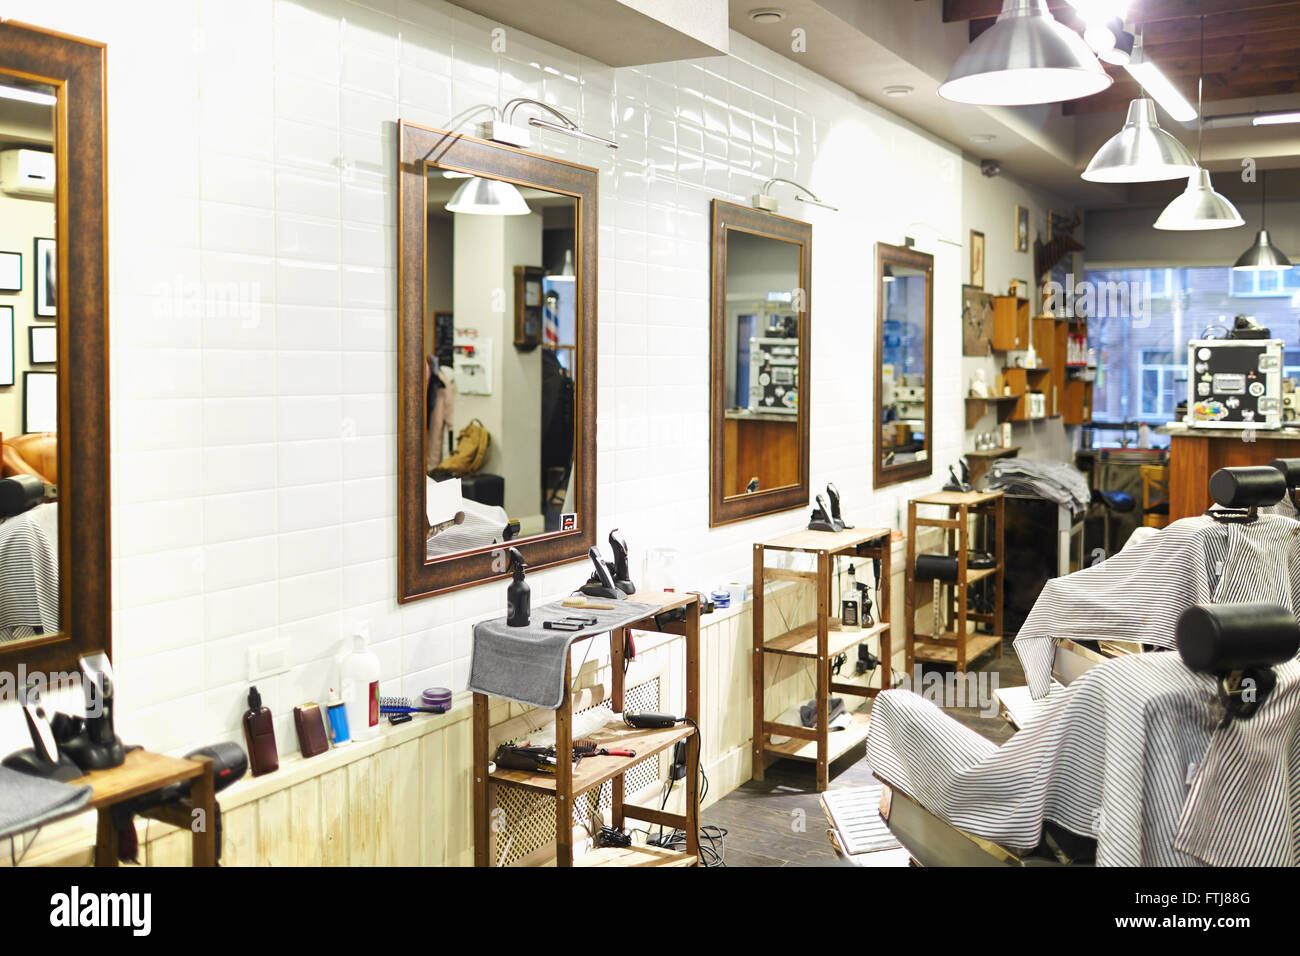 Inside barbershop Stock Photo